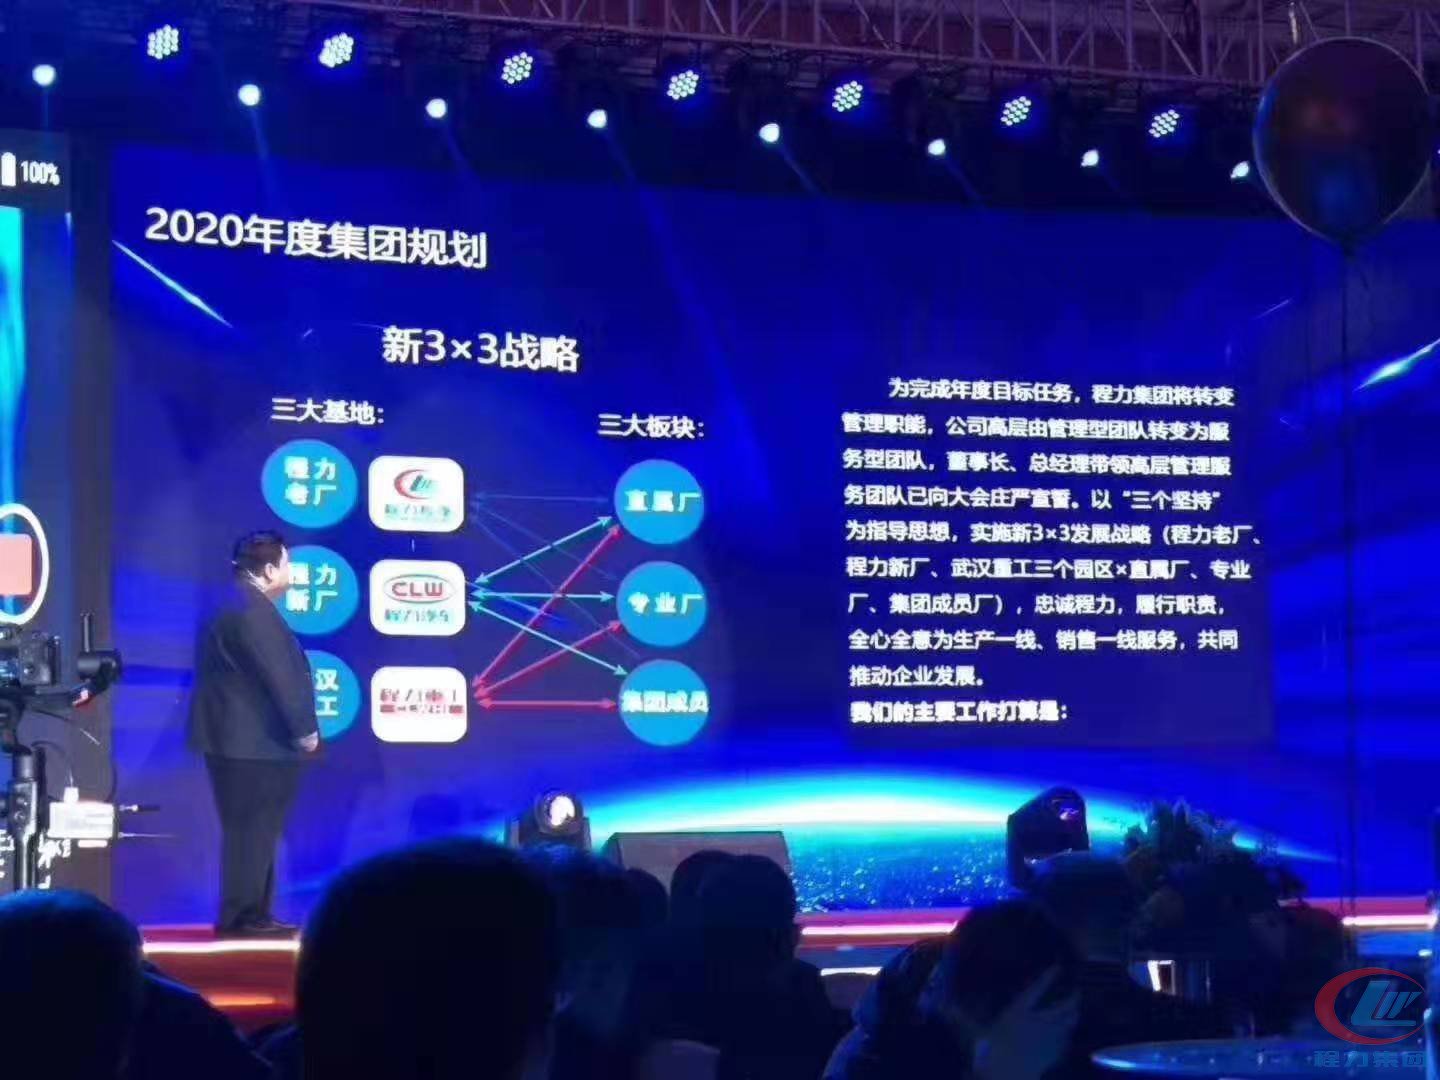 j9.com(中国区)官方网站汽车集团2020年年会